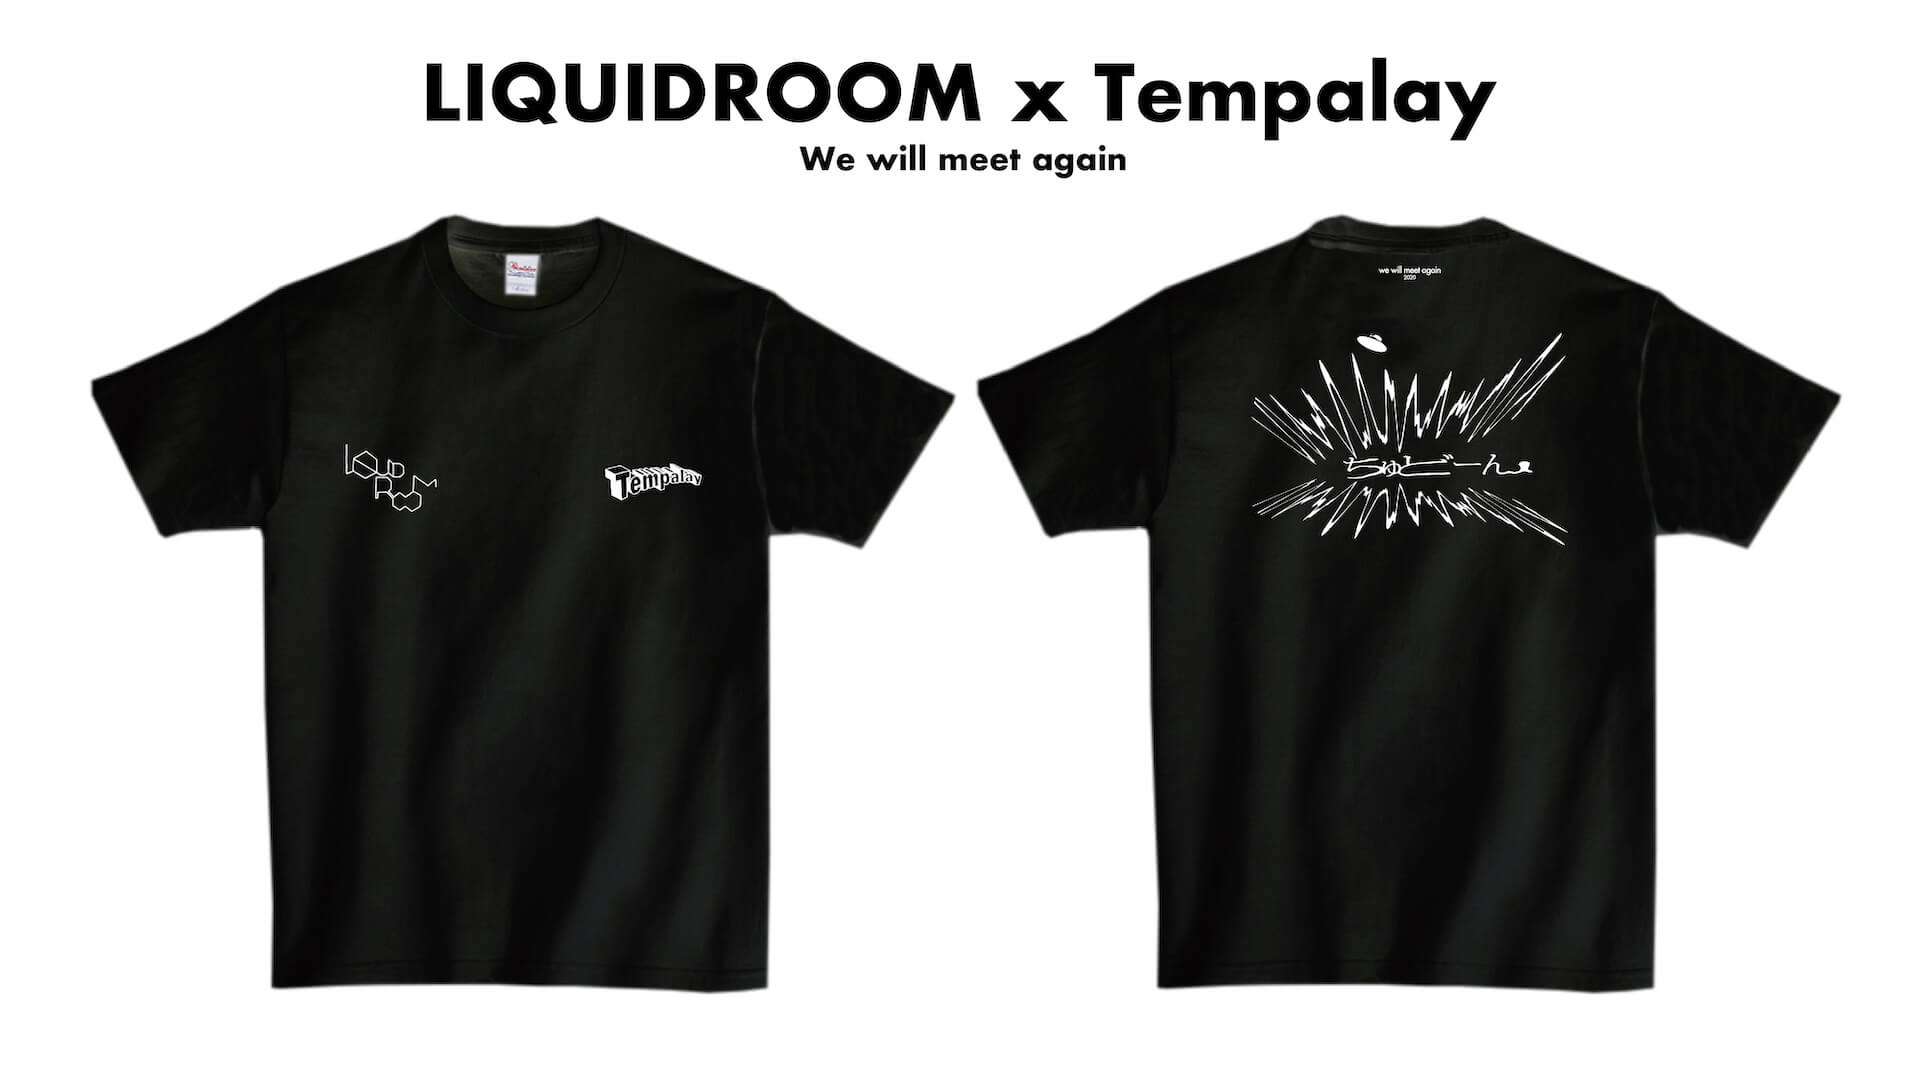 Tempalay「ちゅどーん」──LIQUIDROOMのコラボTプロジェクト〈We will meet again〉より新作登場 music201106-liquidroom-tempalay-2